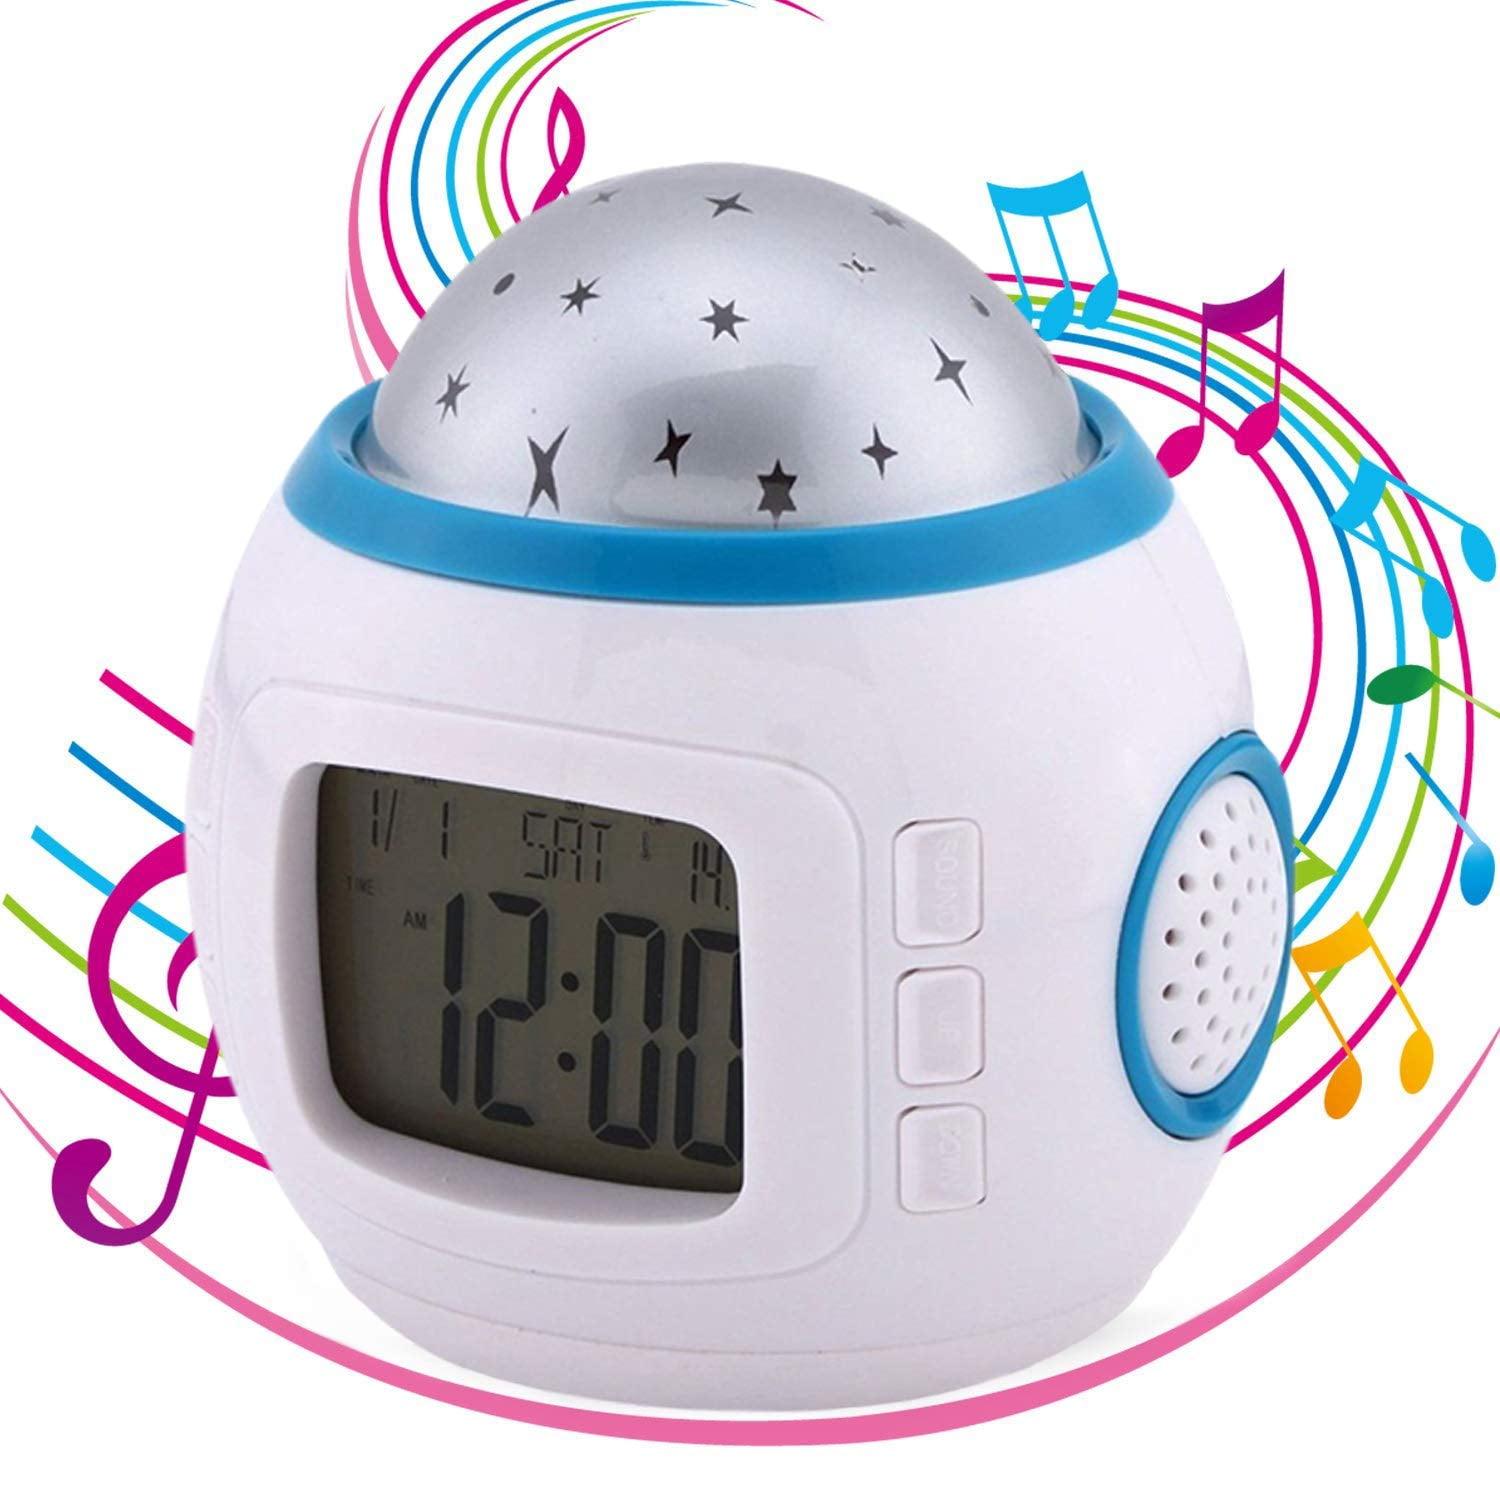 Basketball Alarm Desk Clock 3.75" Room Decor E197 Nice for Gifts wake up 